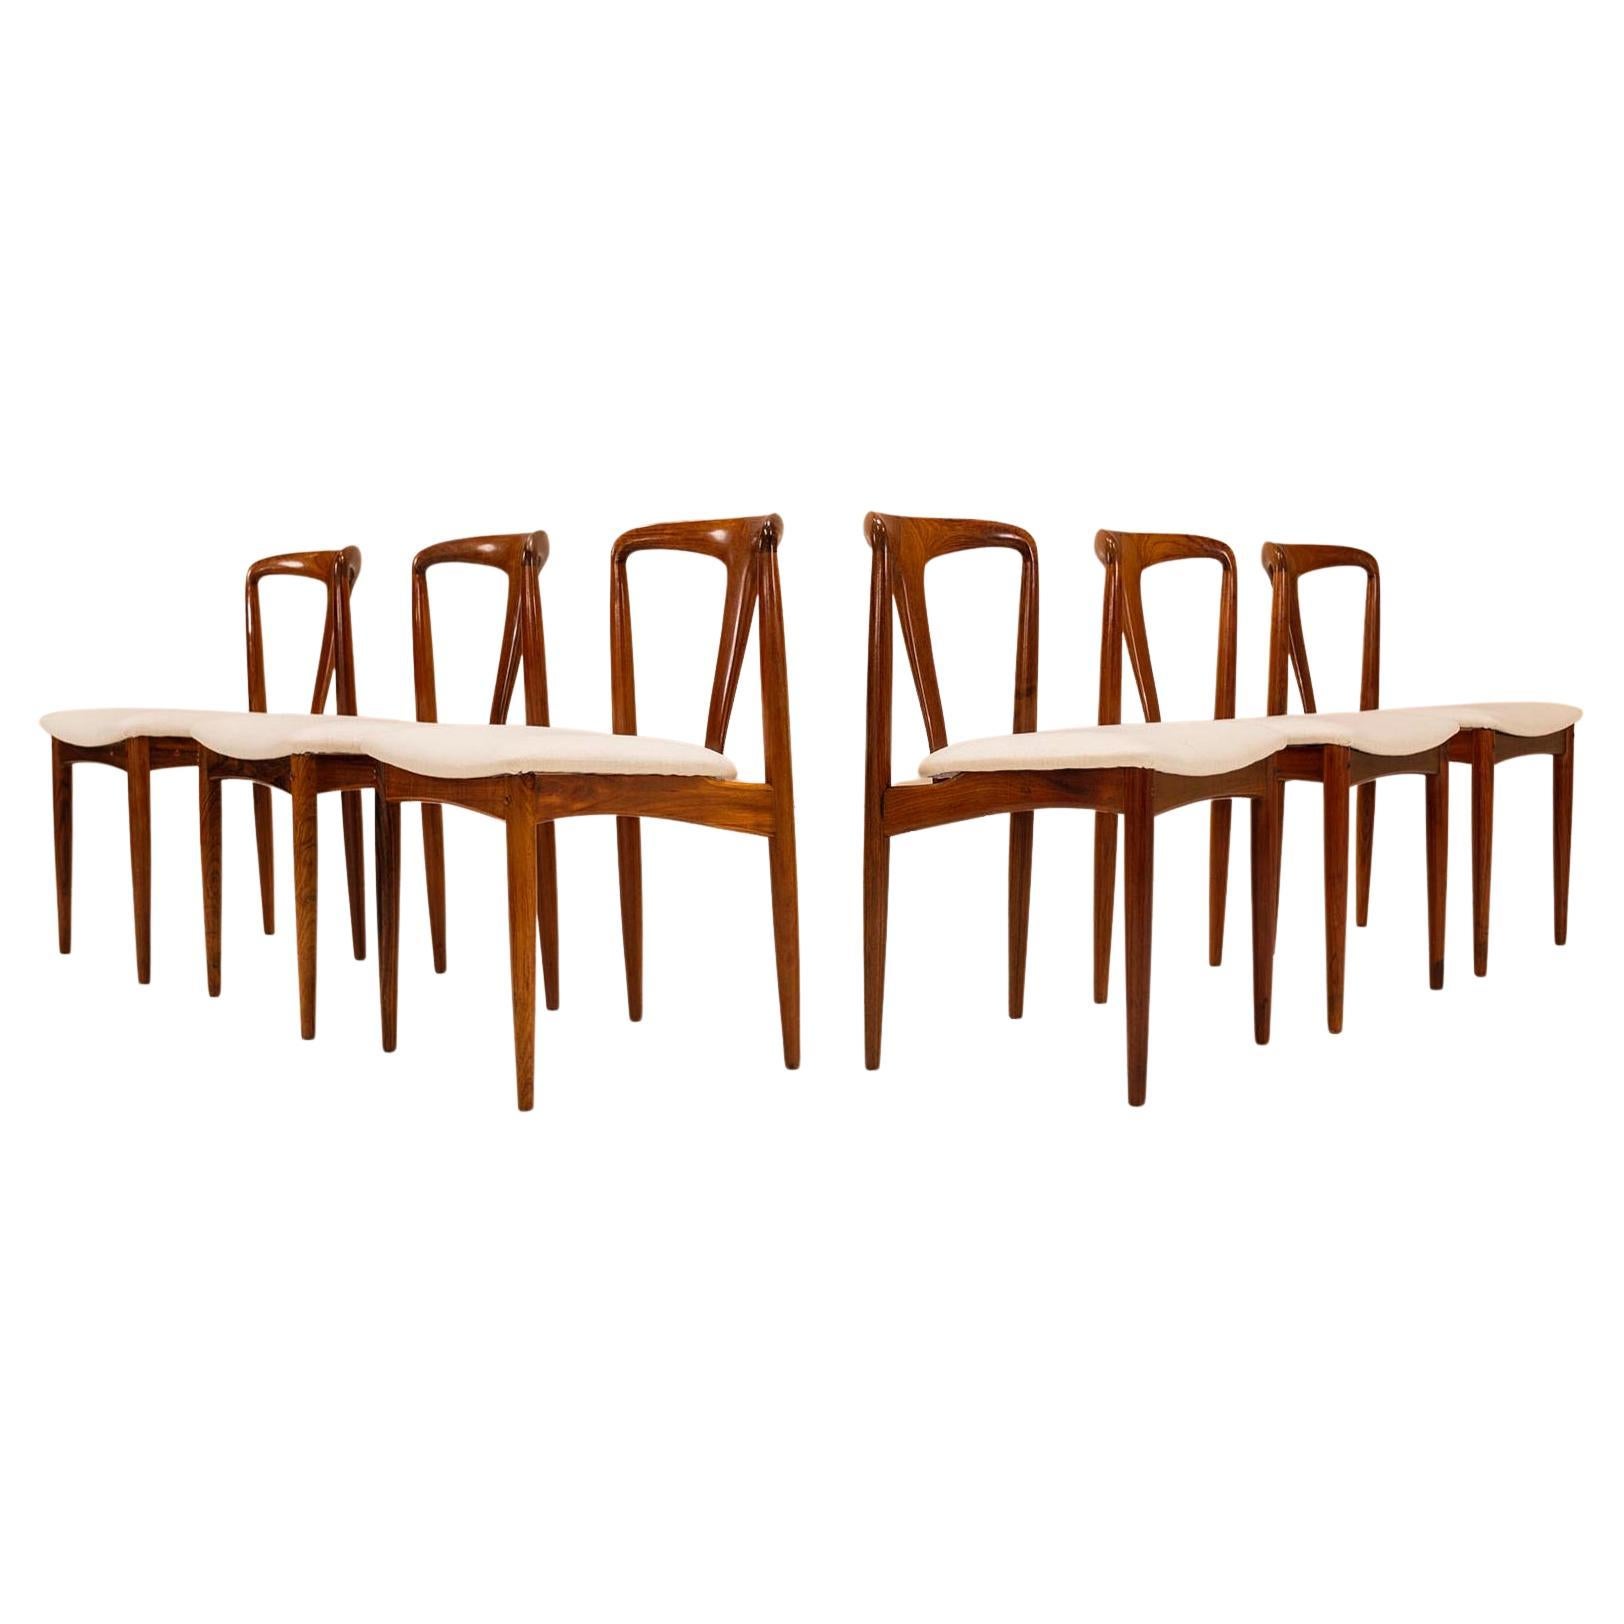 Set of Six Juliane Chairs in Rosewood by Johannes Andersen, Denmark 1965 For Sale